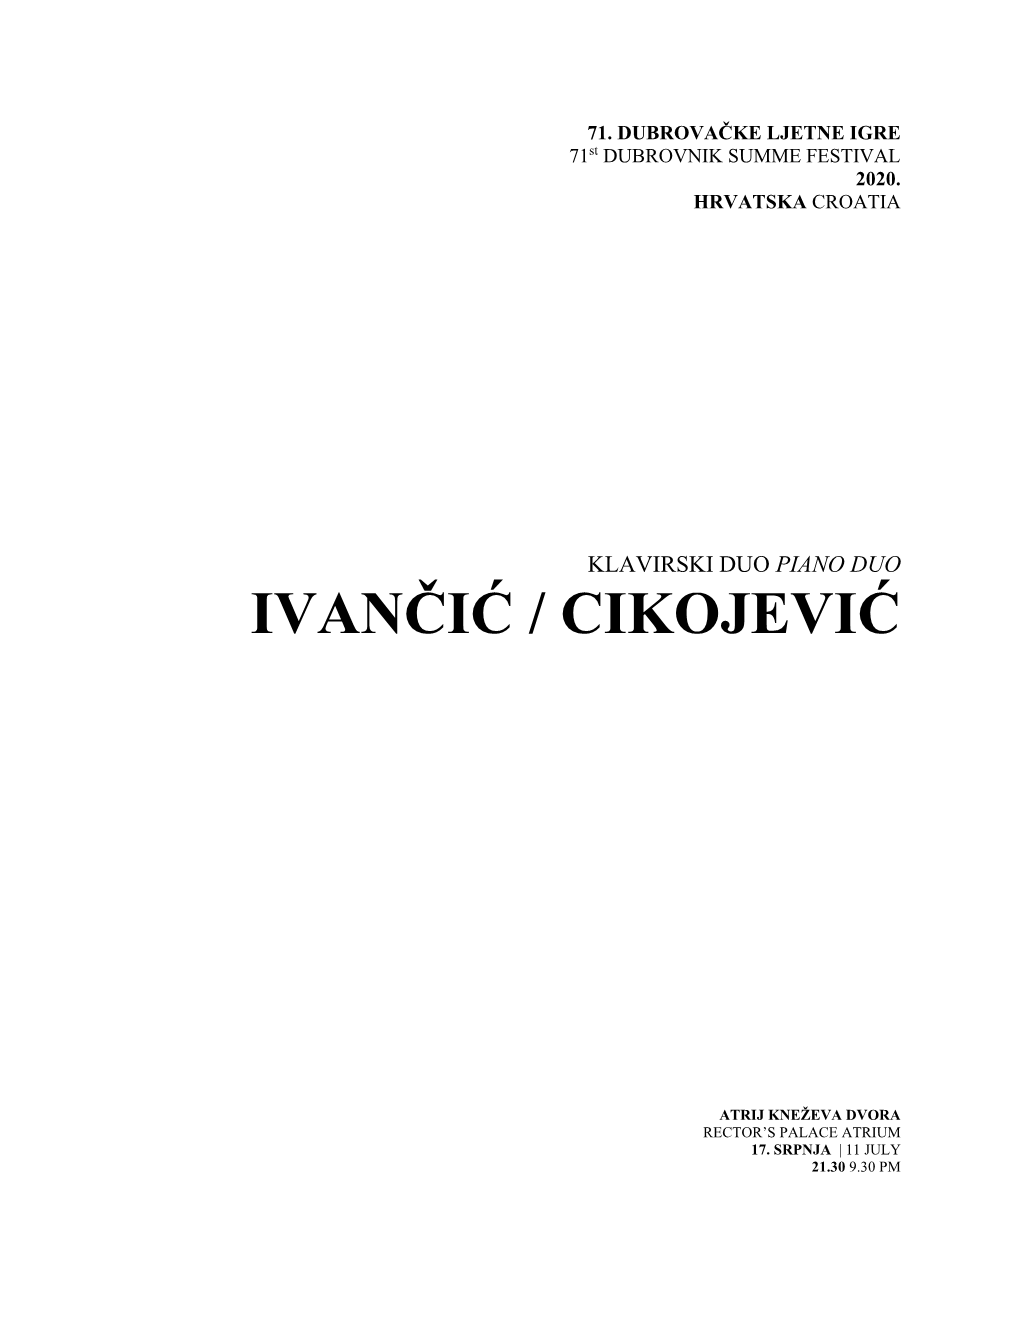 Ivančić / Cikojević